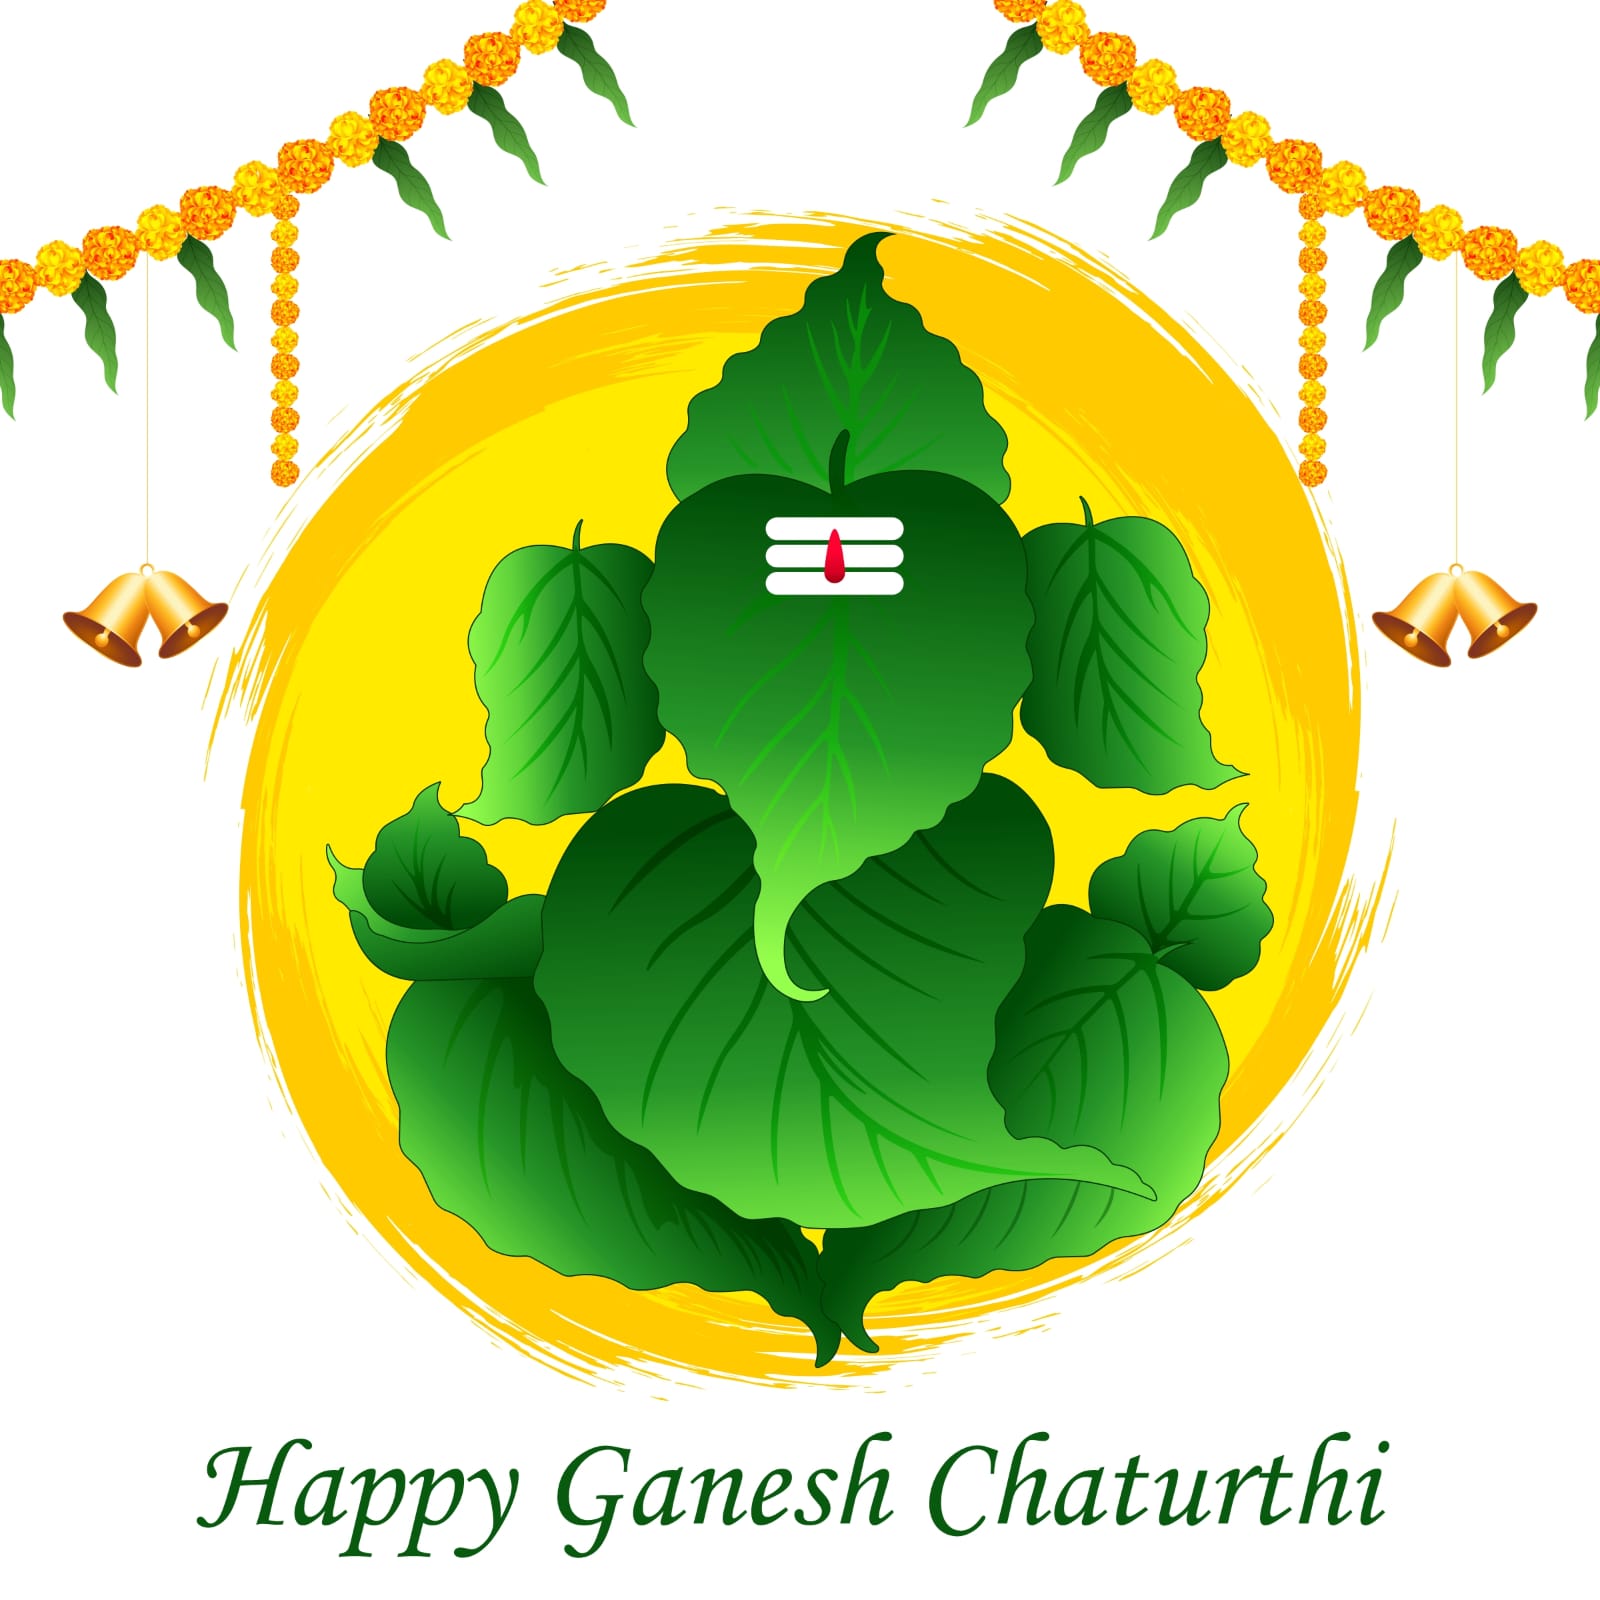 Best Wishes of Ganesh Chaturthi